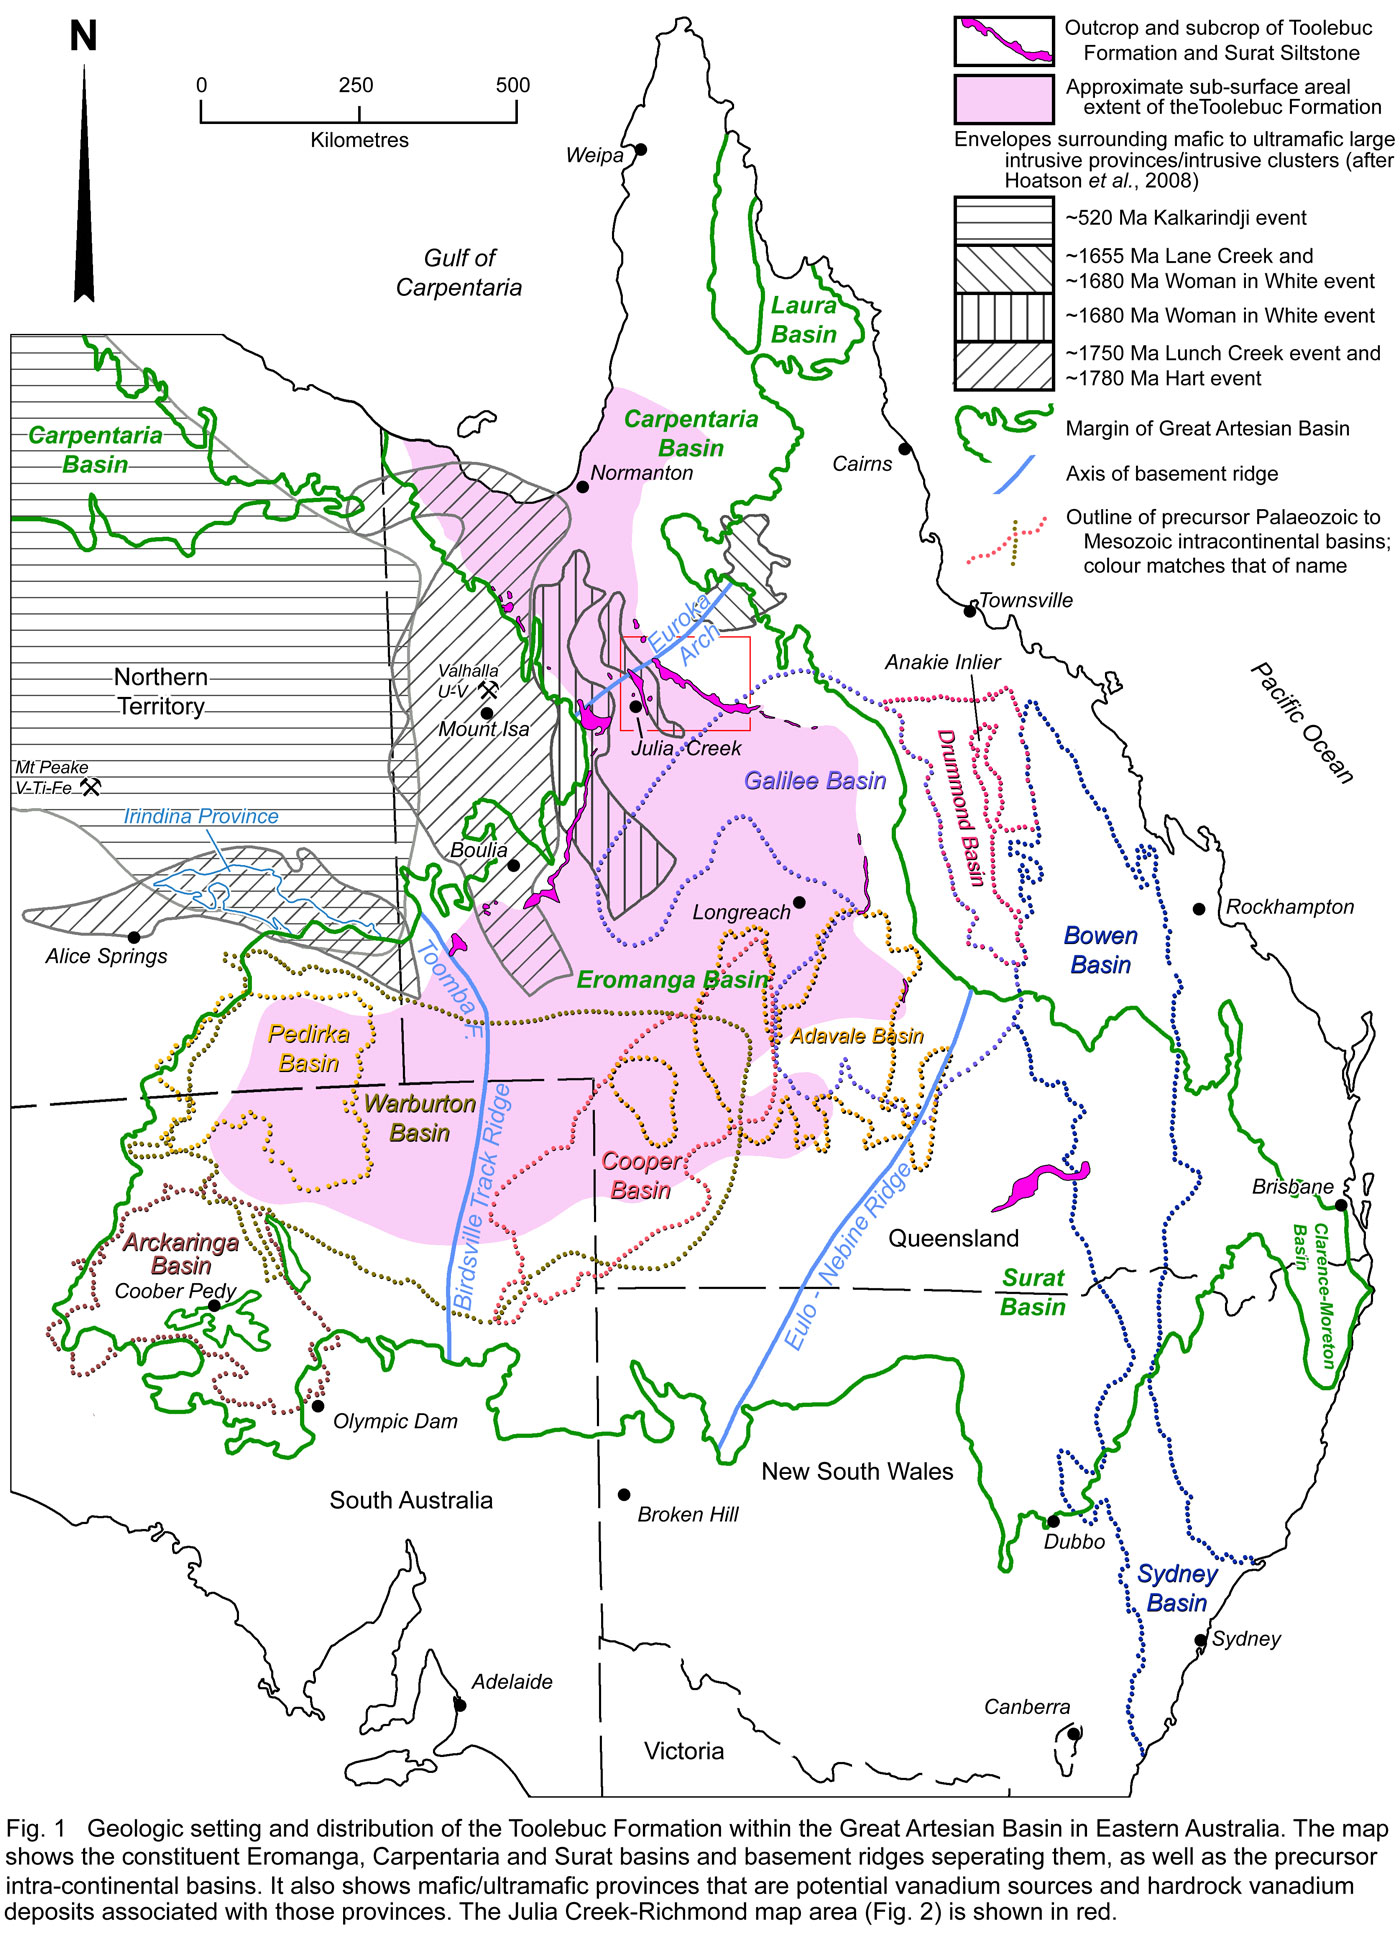 Geological setting of the Eromanga Basin and Toolebuc Formation